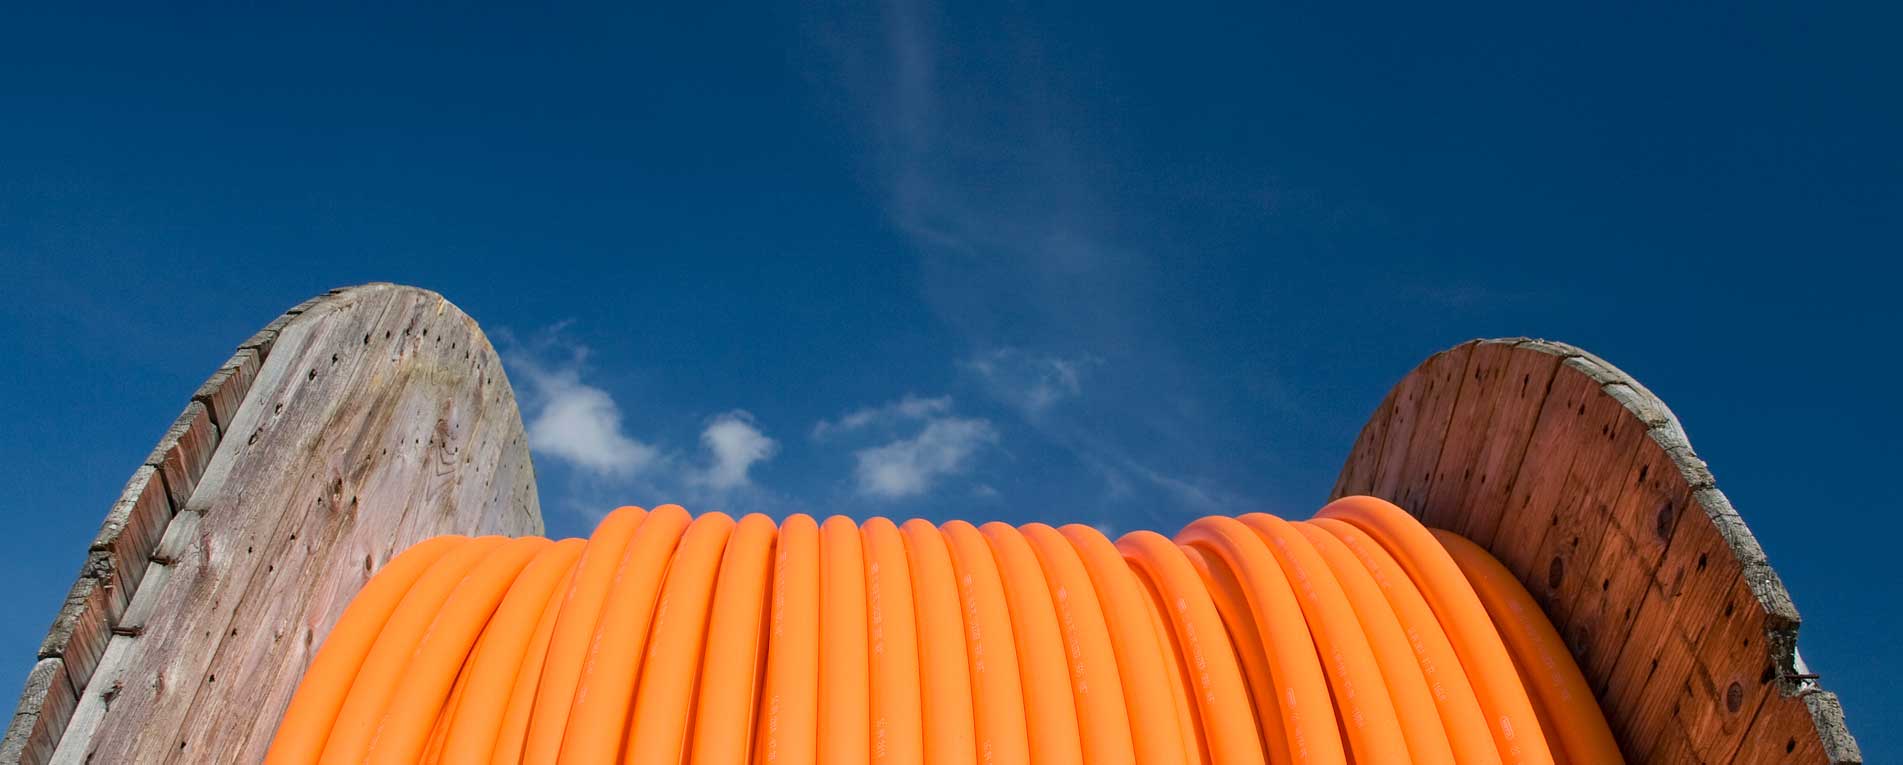 Reel of orange conduit for fiber optic cable